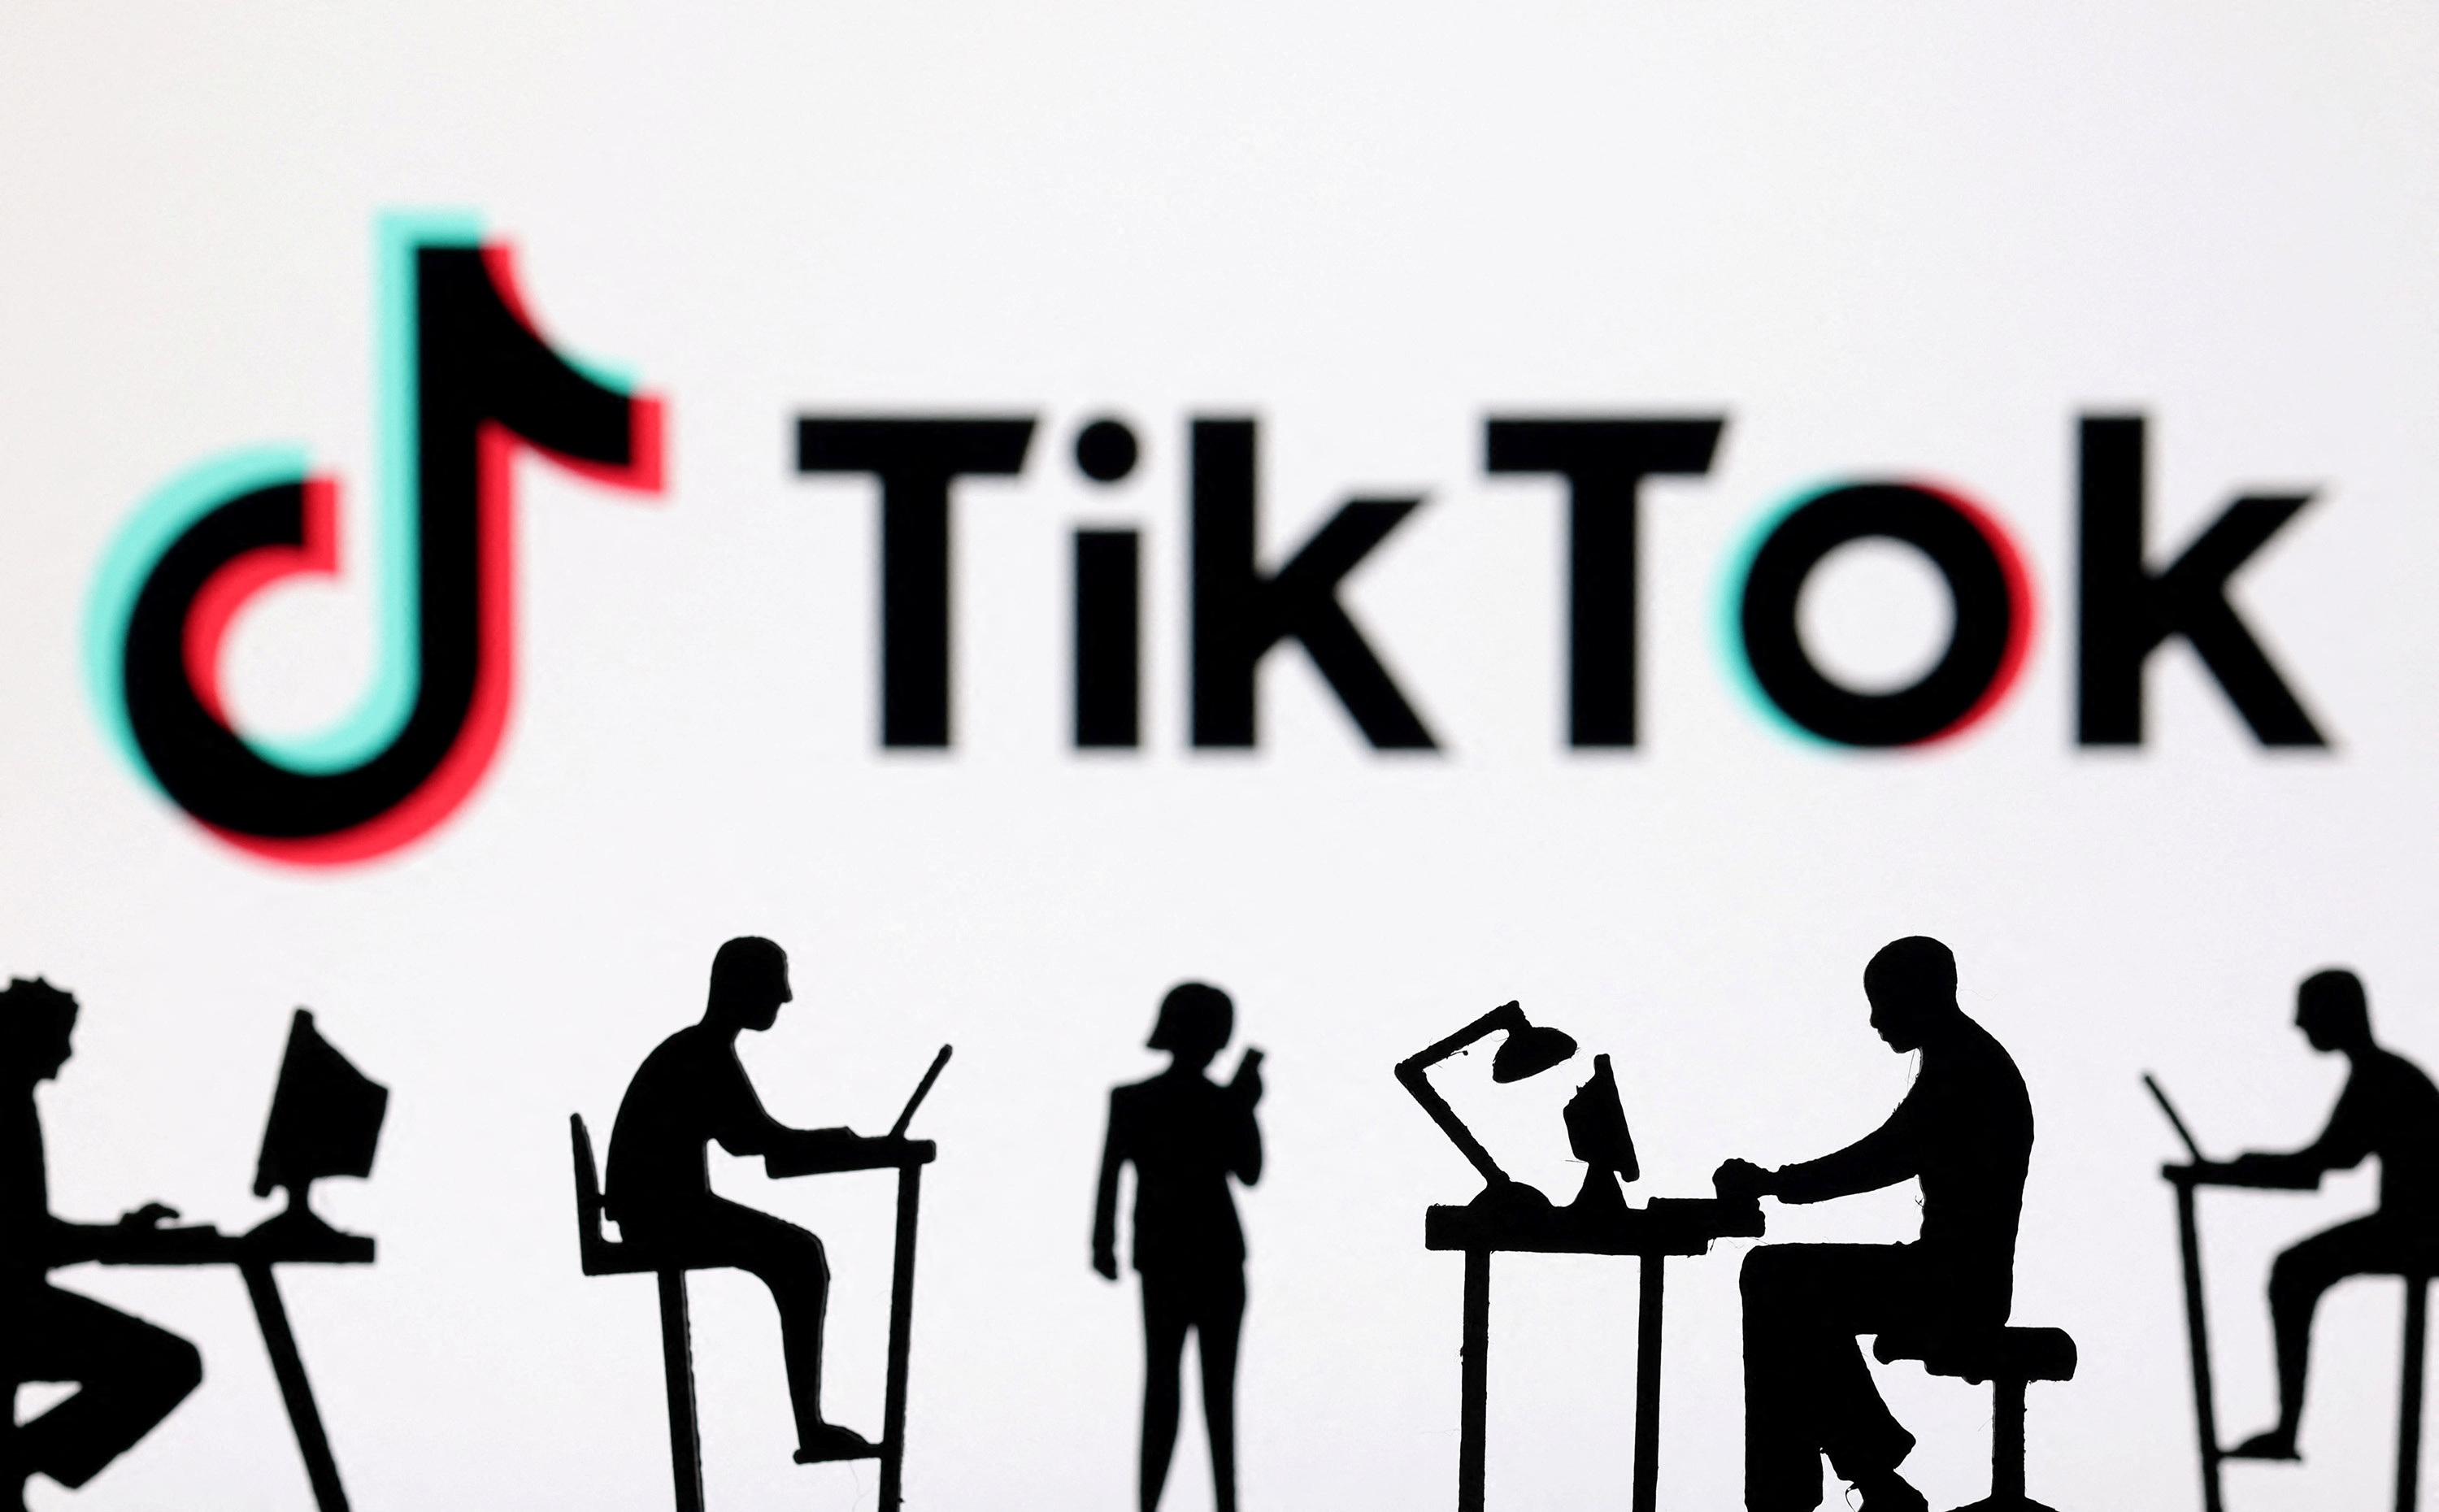 Illustration shows TikTok logo